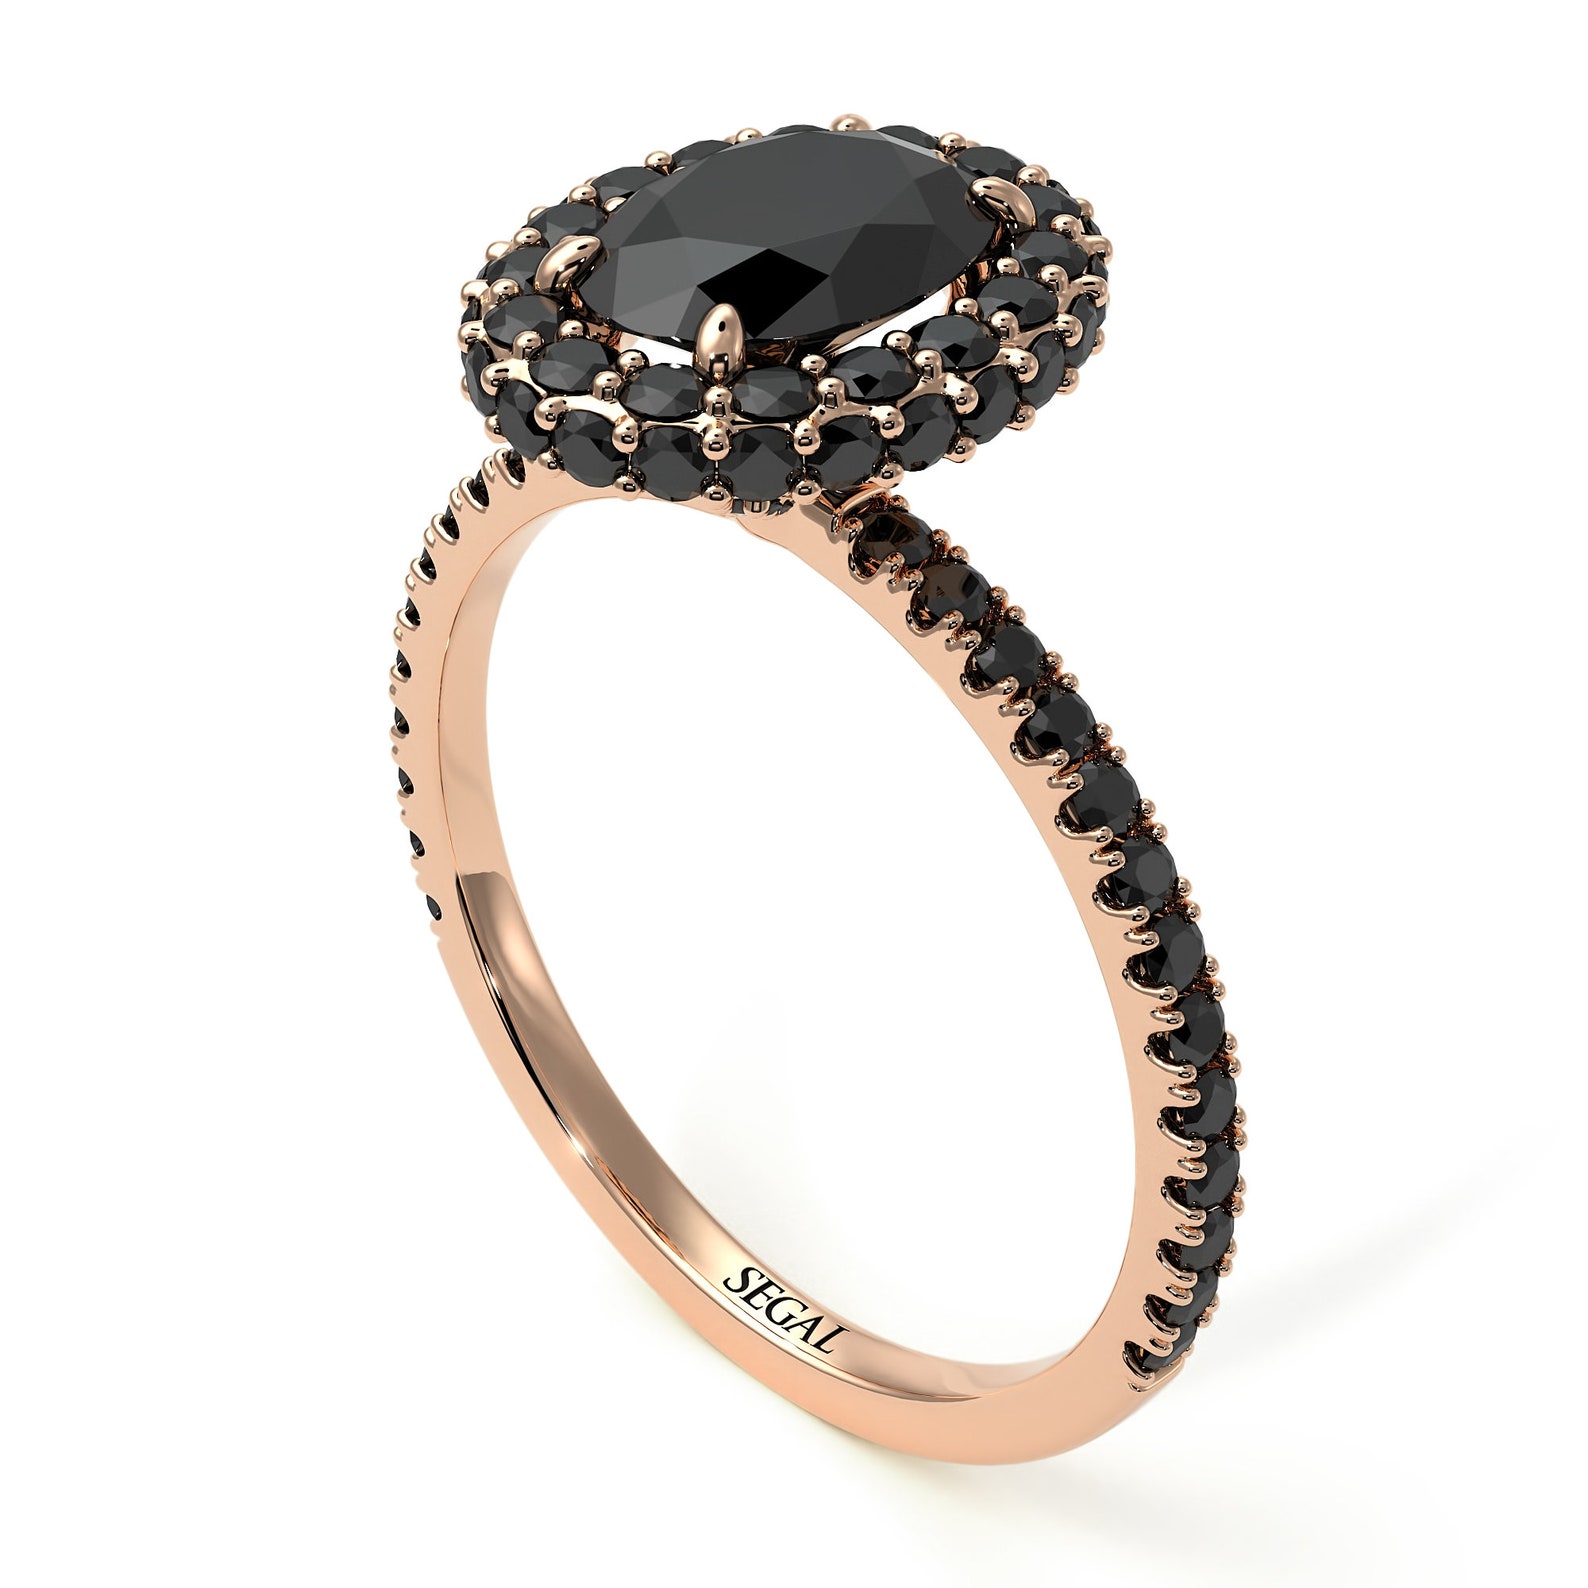 Oval Halo Diamond Black Engagement Ring Gold 18K-14K Rose Gold | Etsy